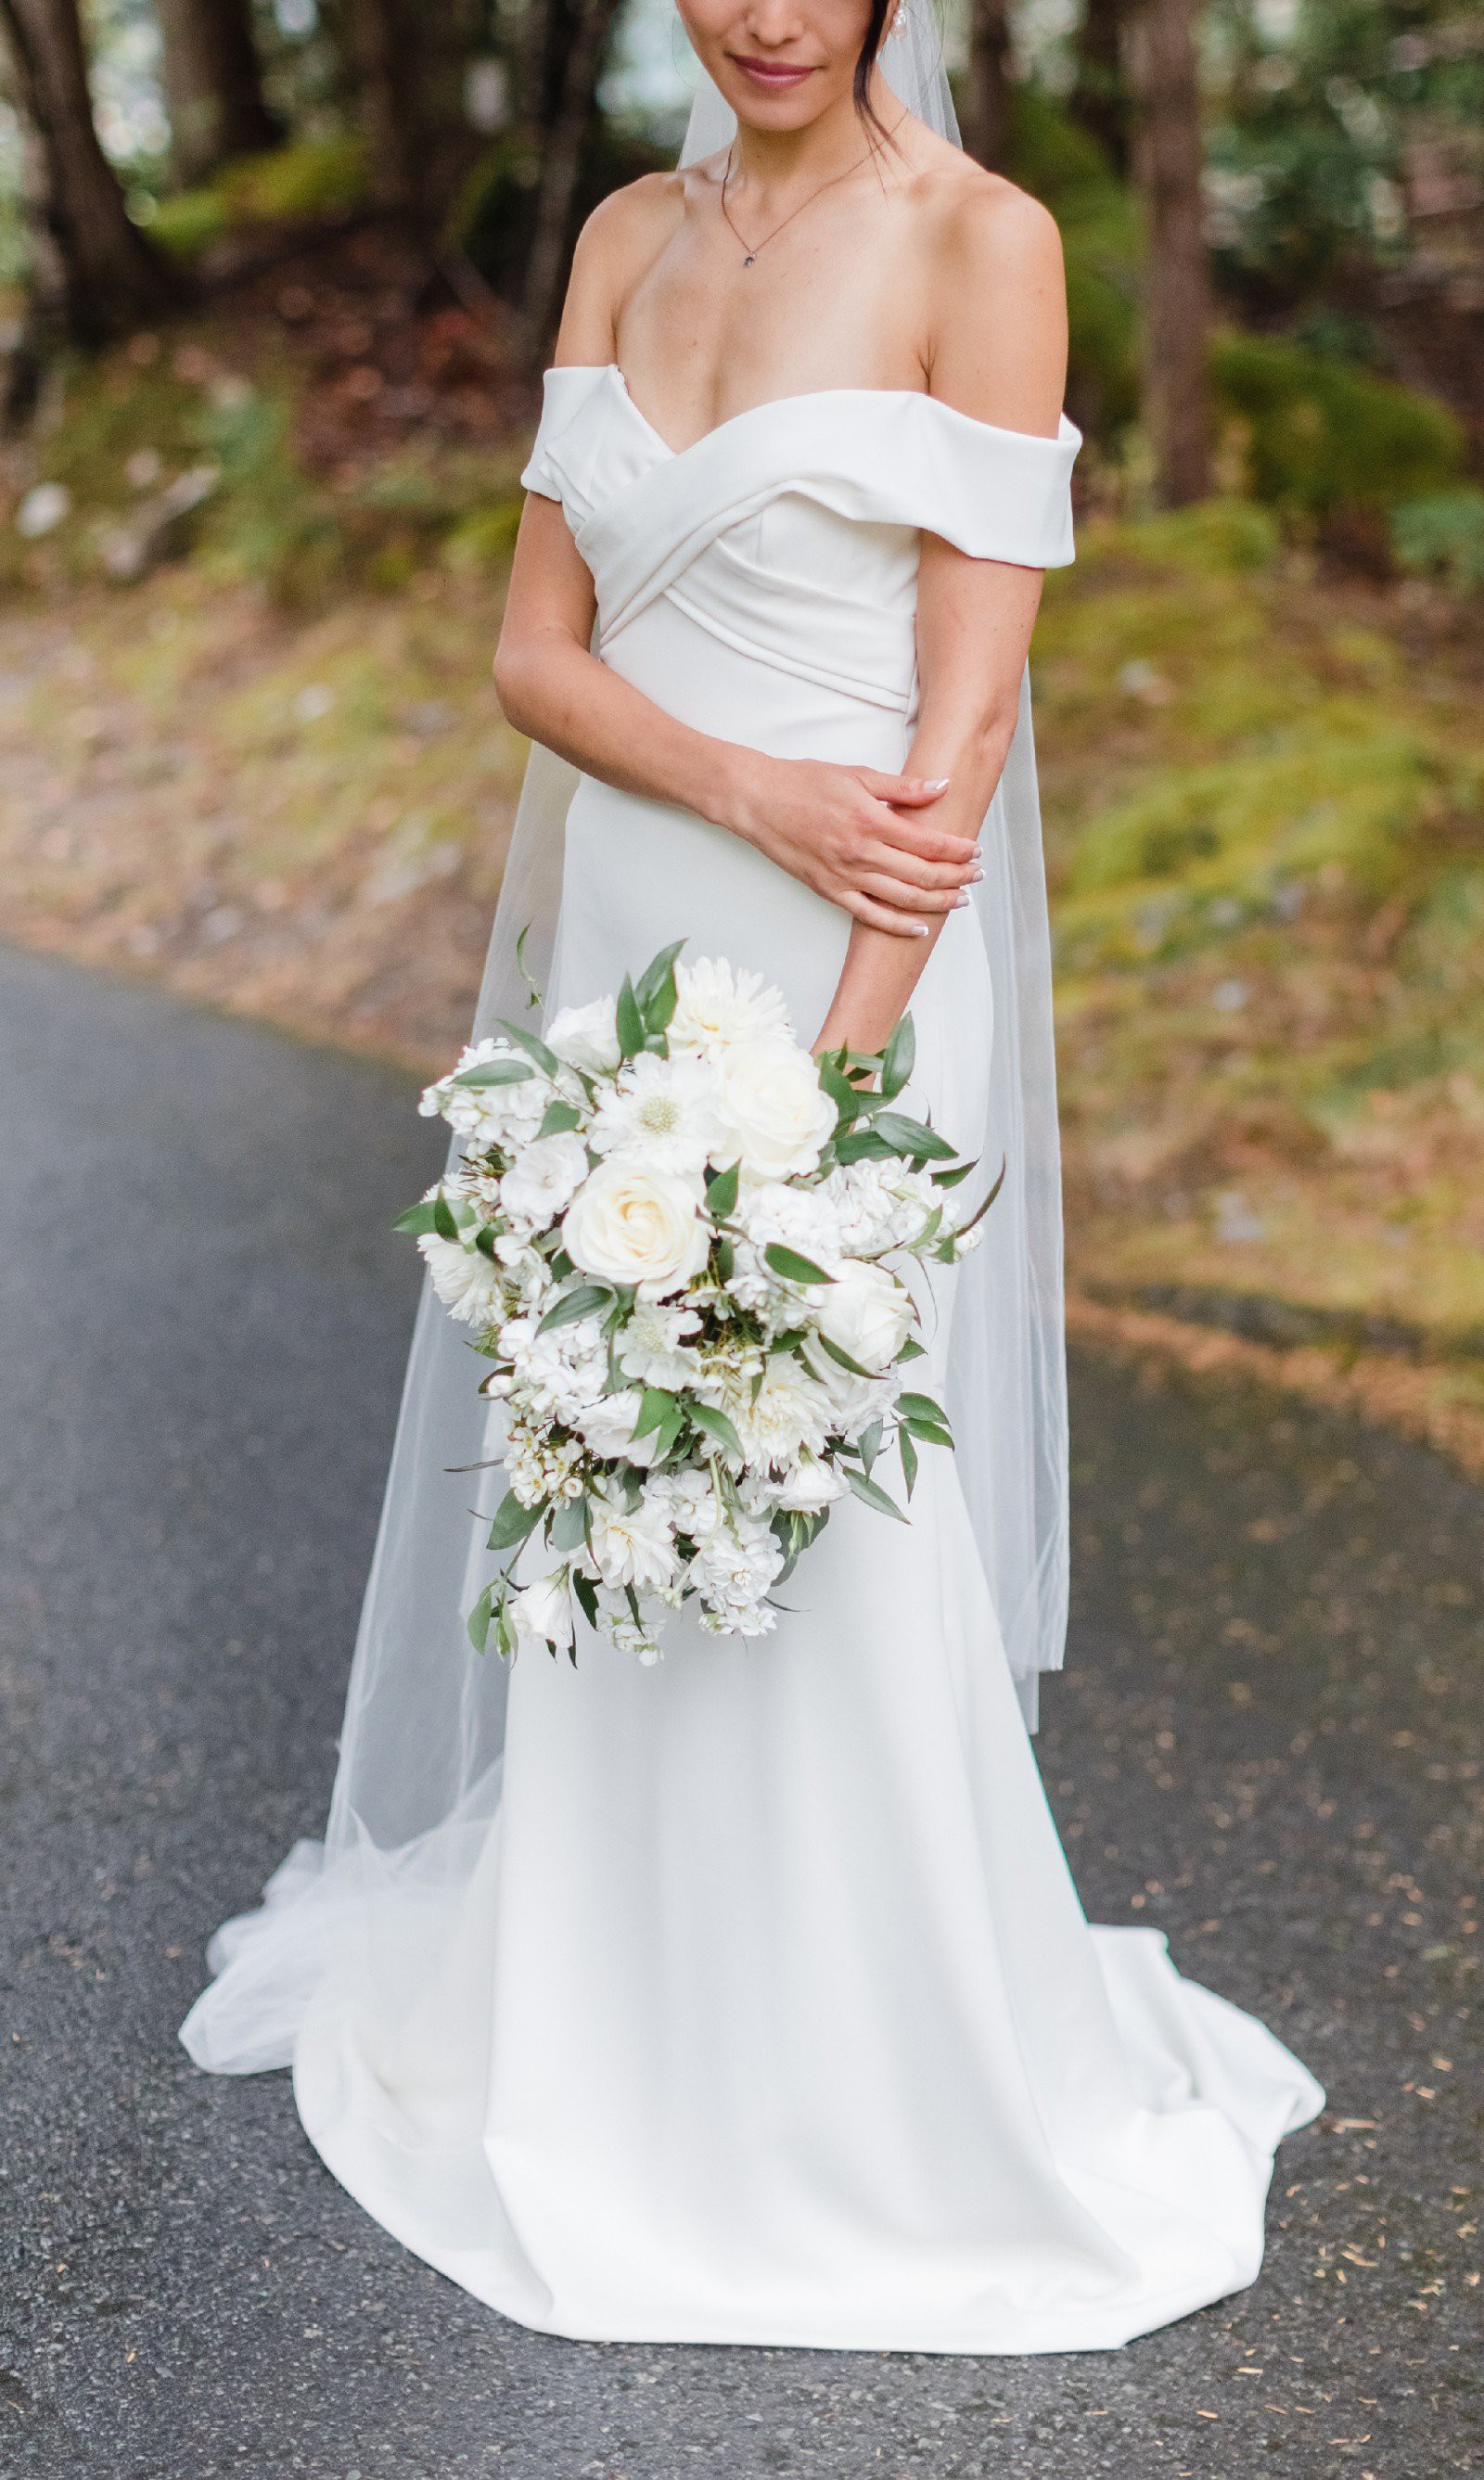 BHLDN Theia Blake New Wedding Dress Save 56% - Stillwhite